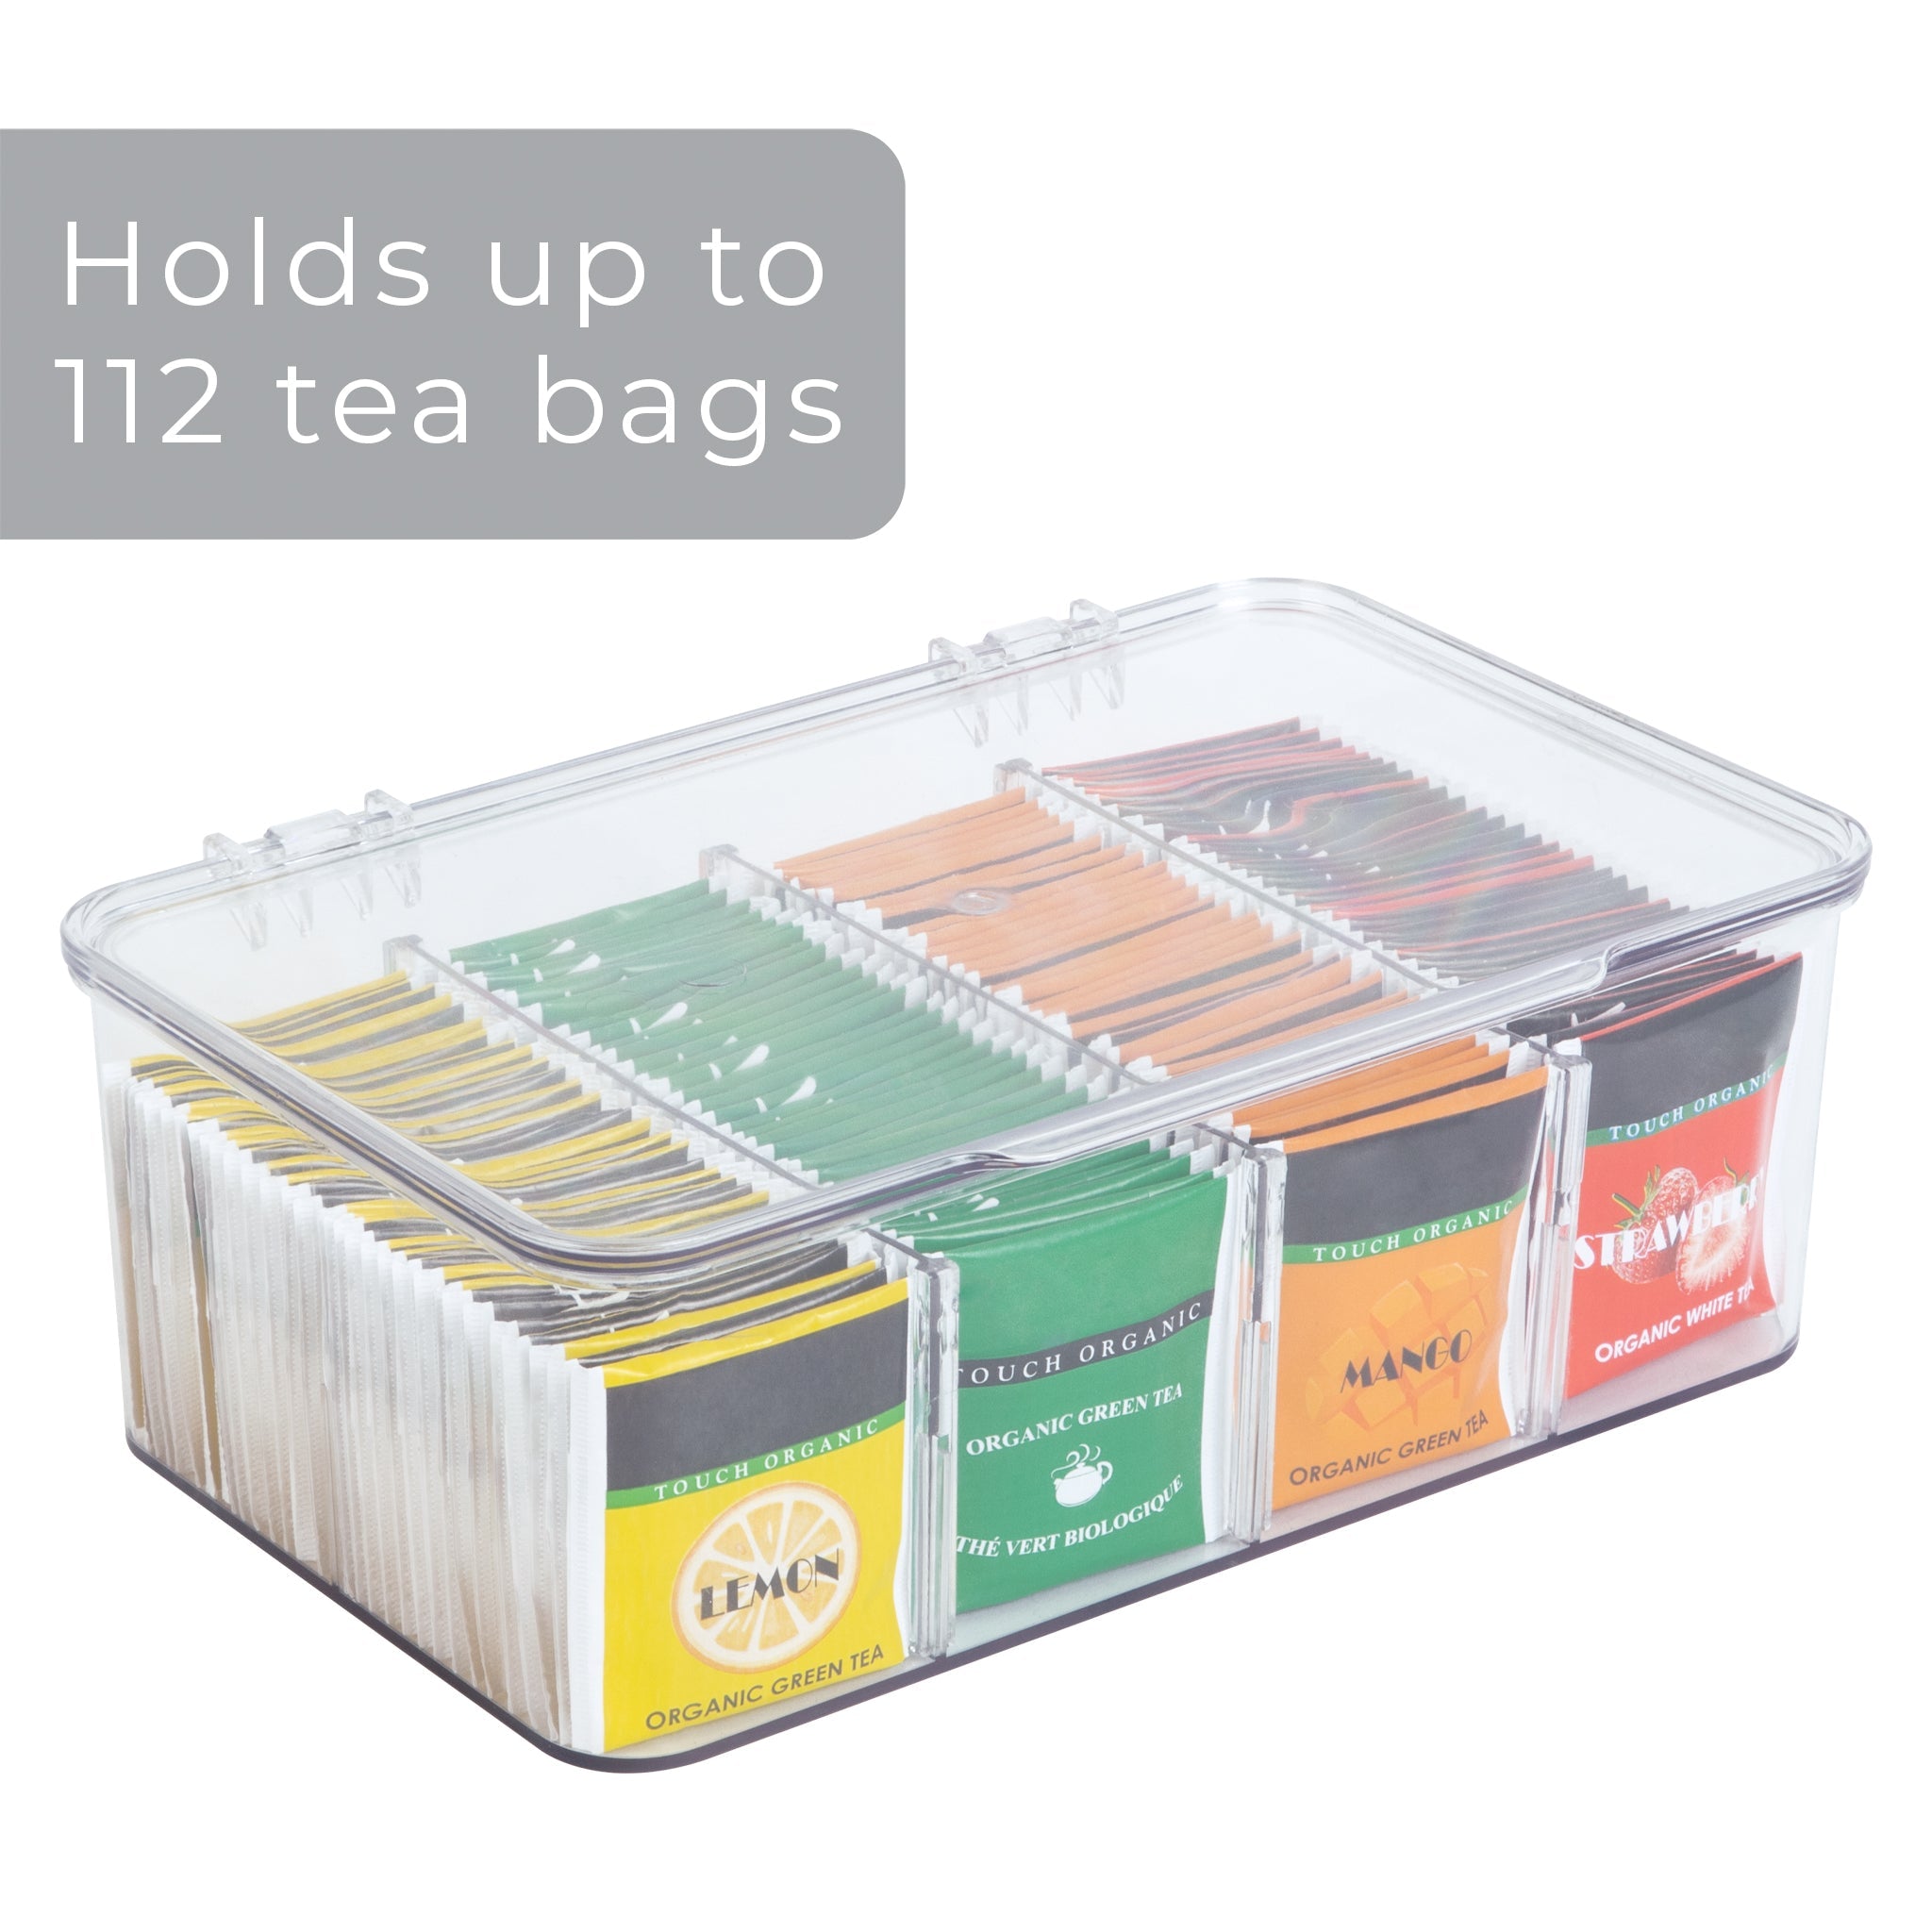 Buy mDesignTea Storage Boxes - Plastic Tea Box with 8 Compartments